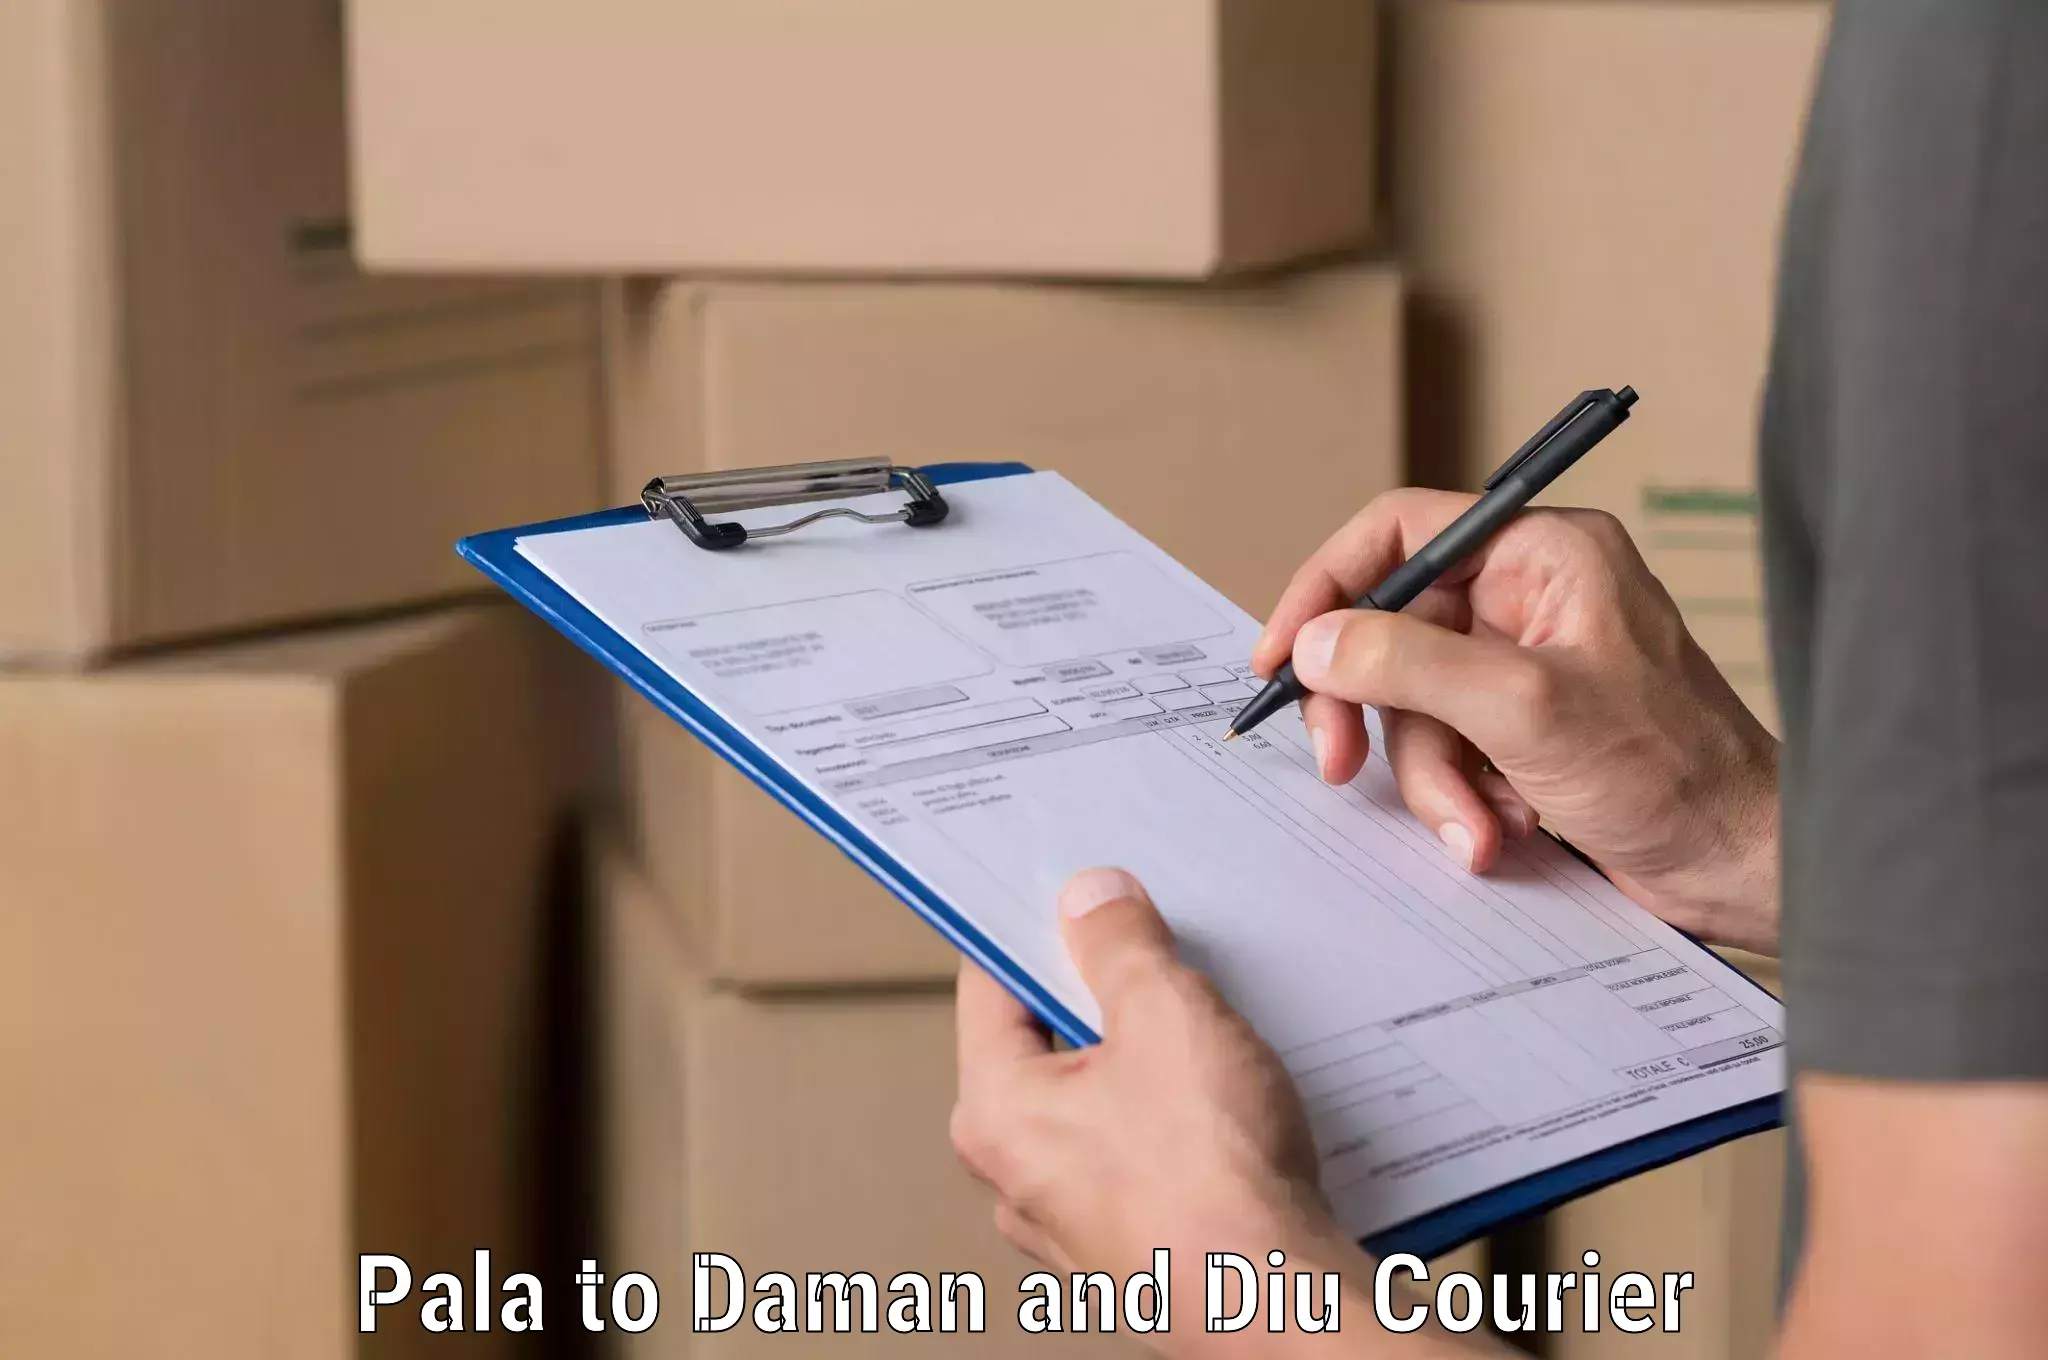 Smart shipping technology Pala to Daman and Diu